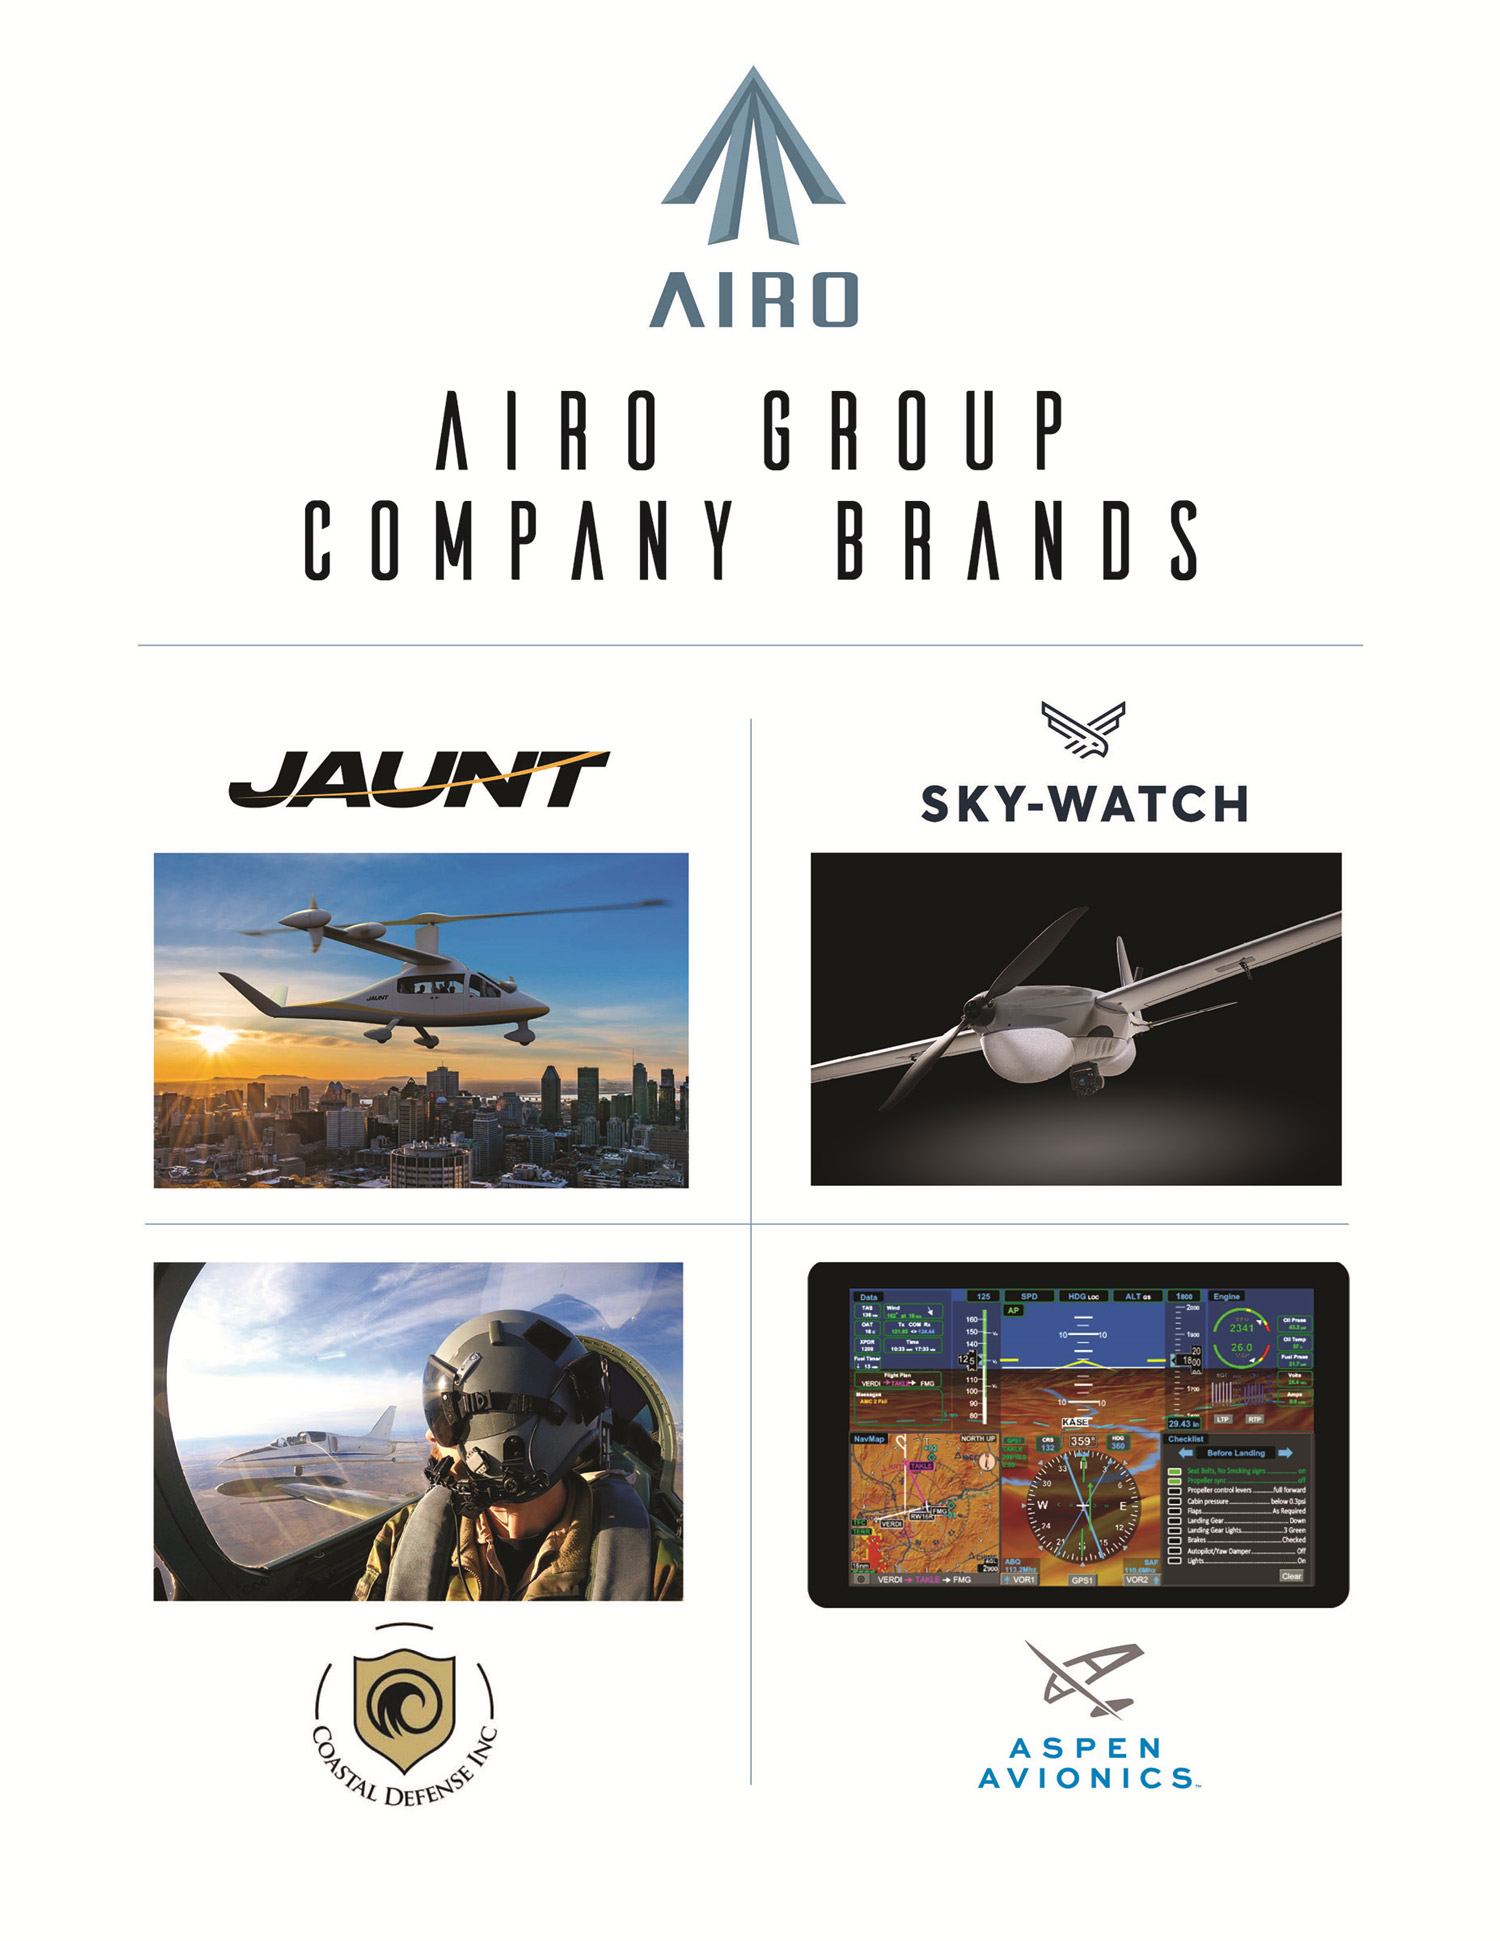 Airo Group Company Brands